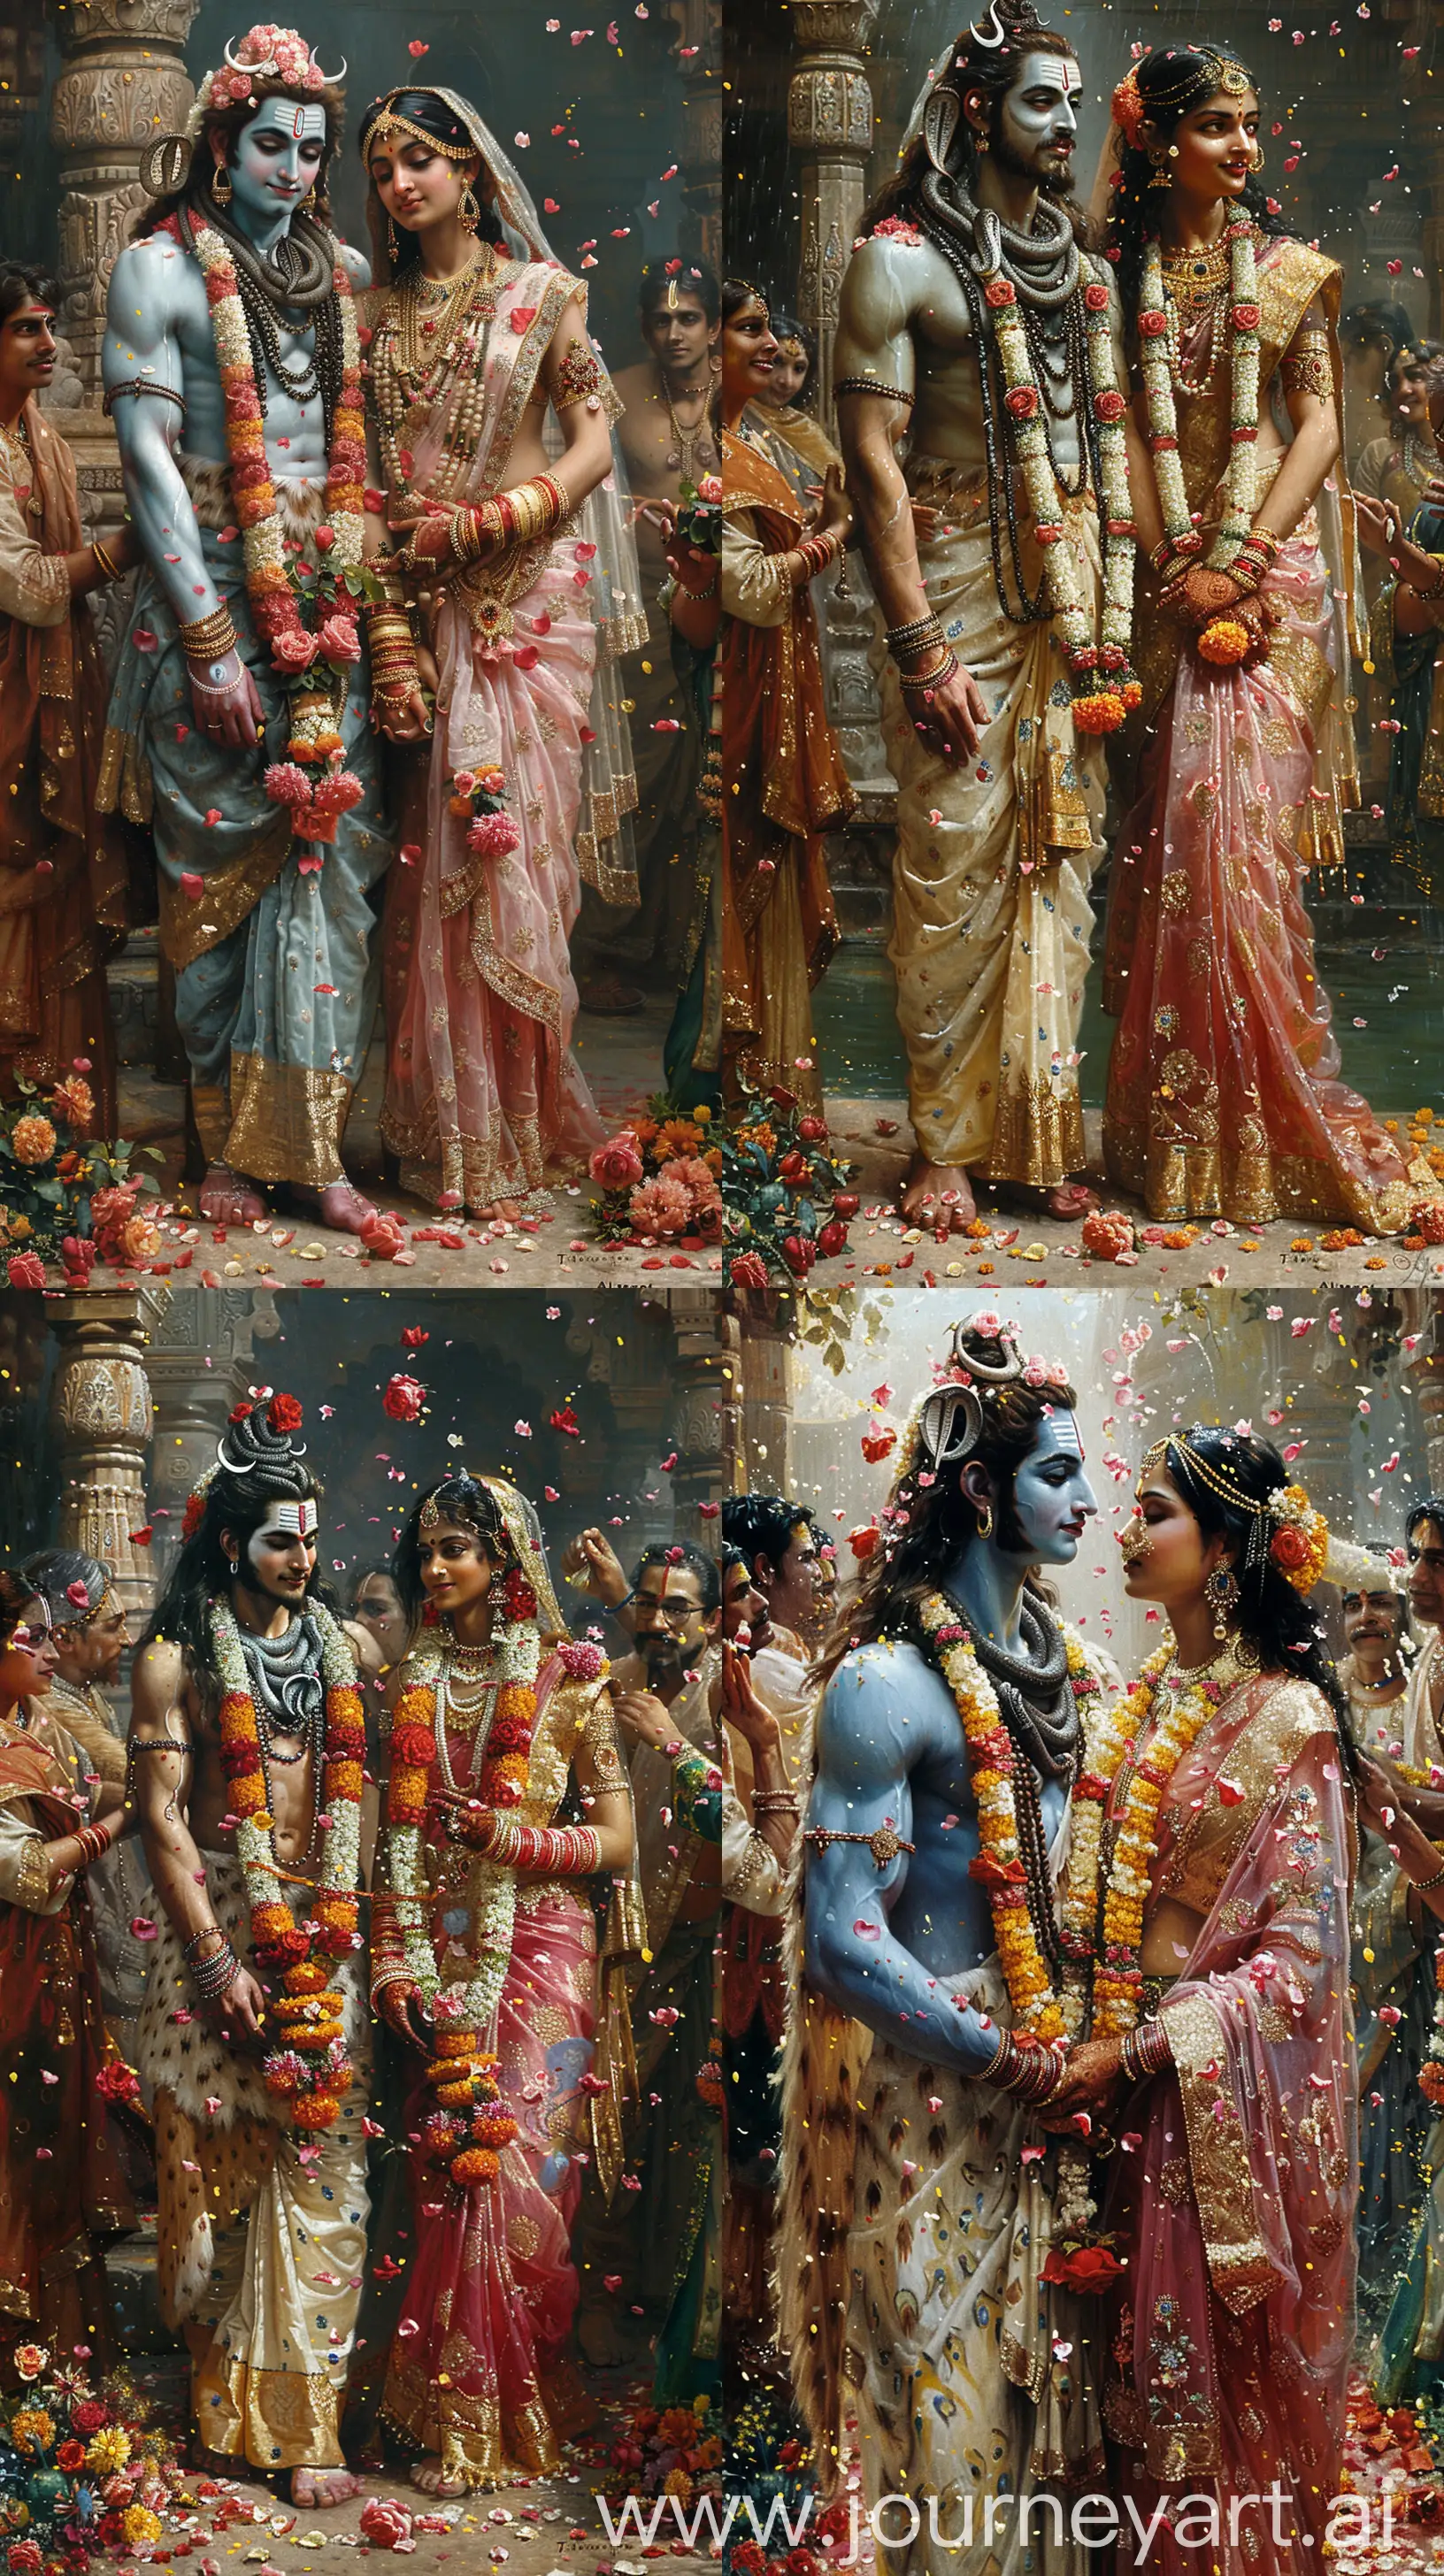 Lavish-Ancient-Indian-Wedding-Ceremony-of-Lord-Shiva-and-Goddess-Parvati-Grand-Shivratri-Festival